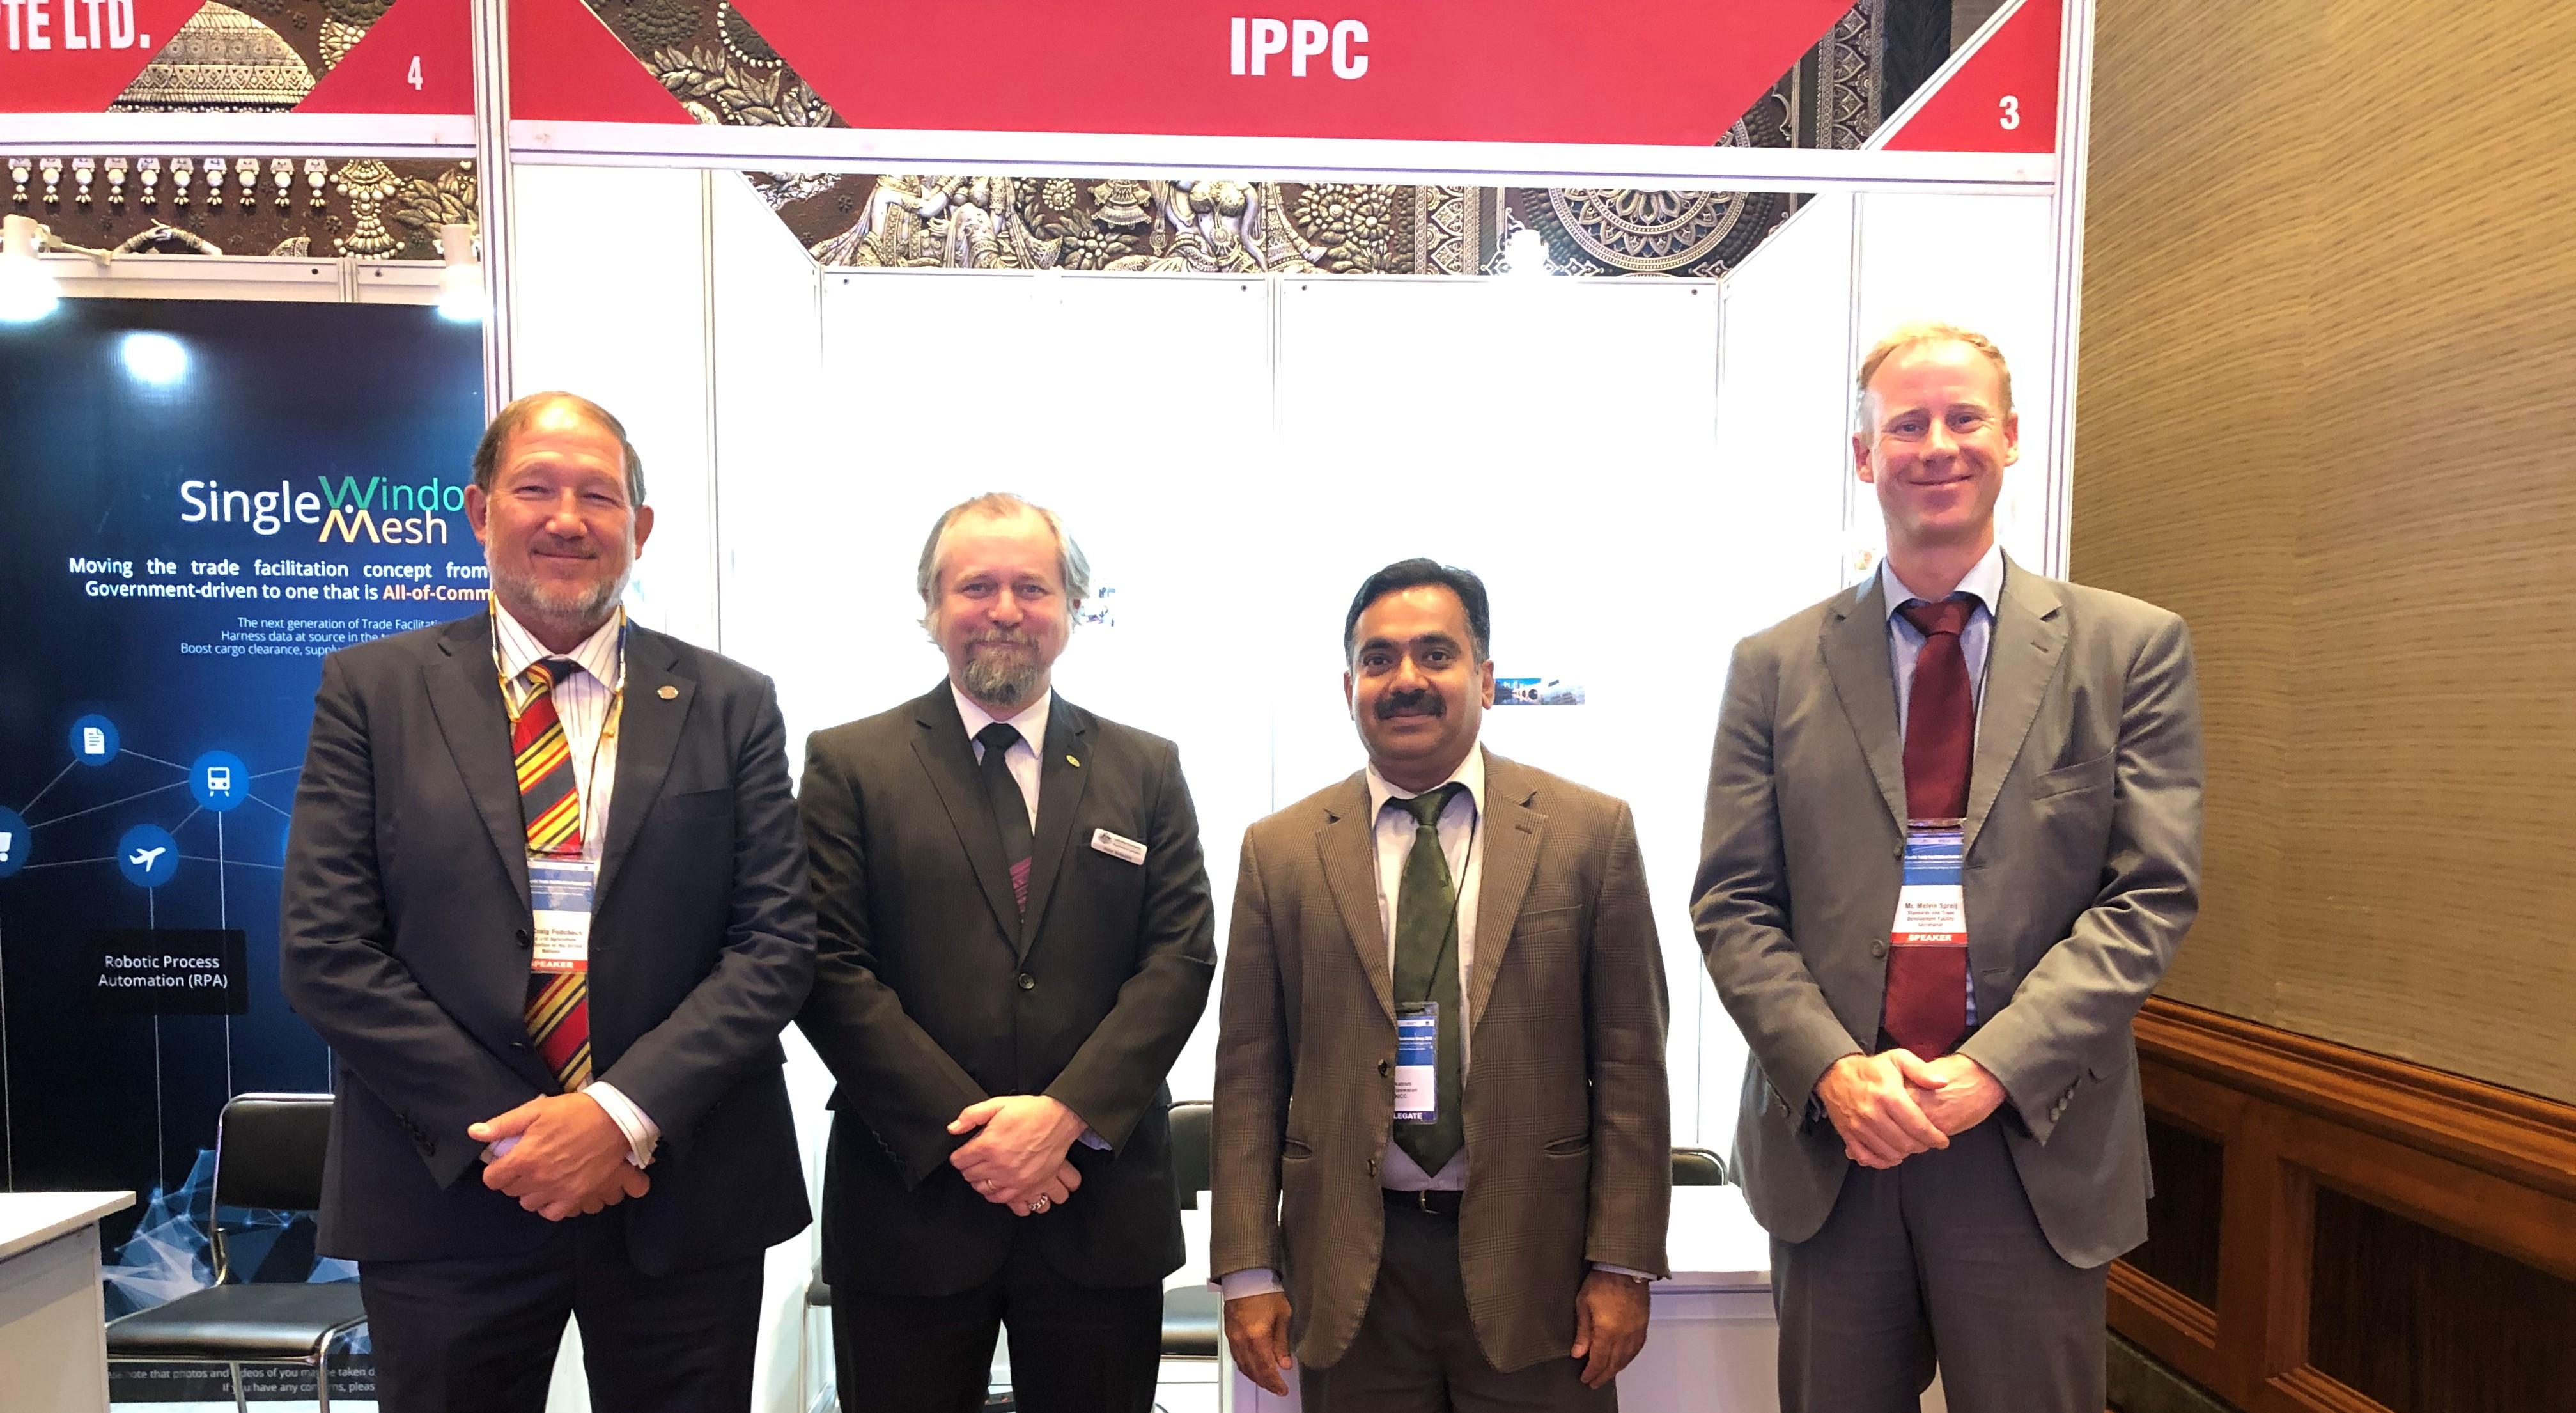 Innovation Award Celebrates UNICC and IPPC Partnership for the ePhyto Project